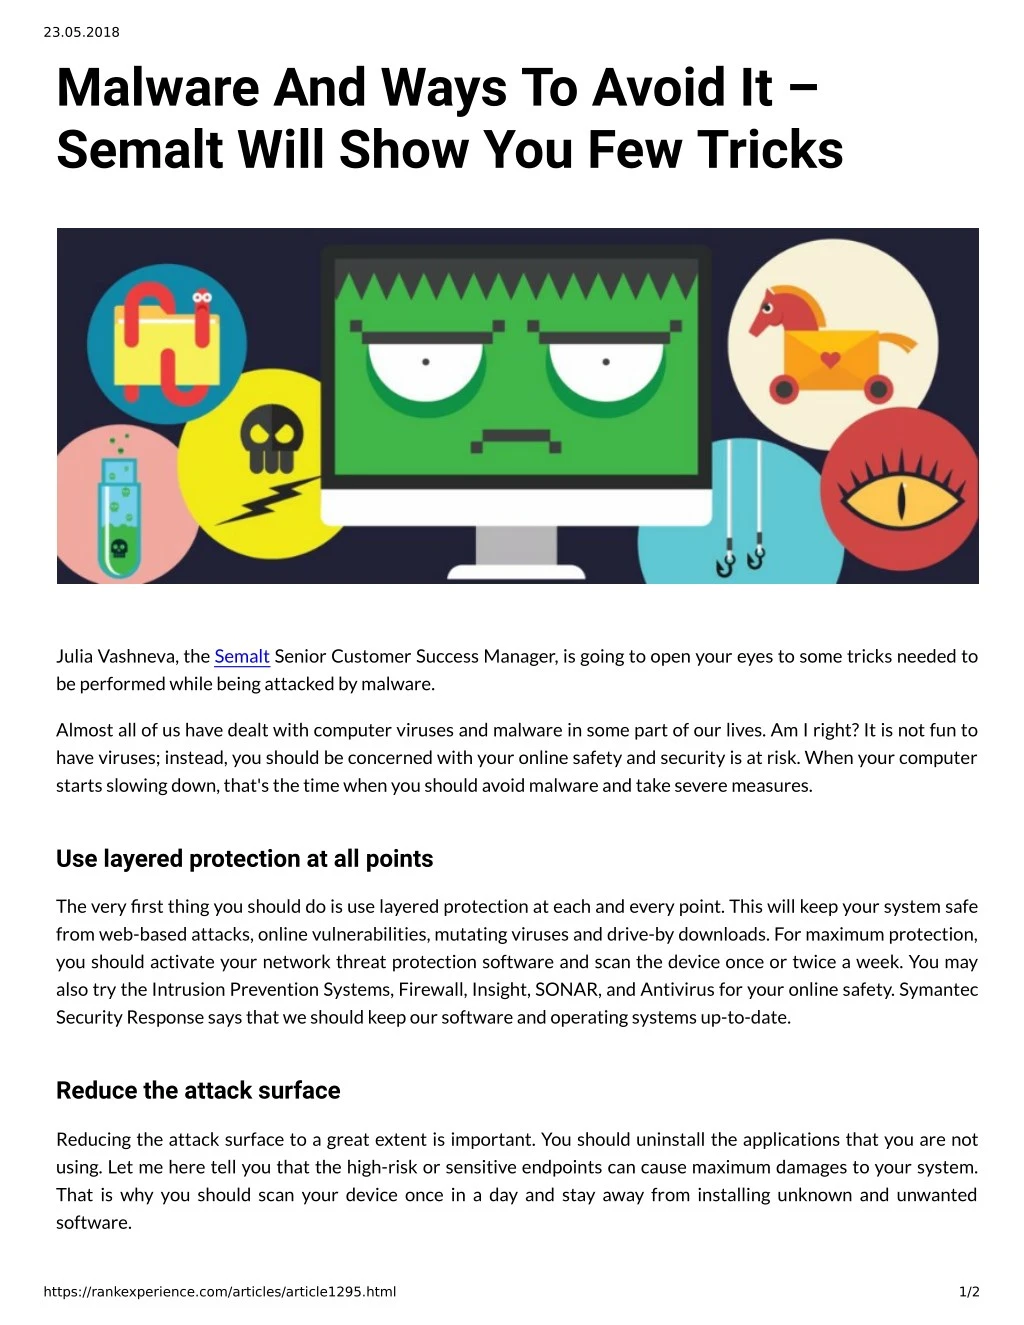 23 05 2018 malware and ways to avoid it semalt